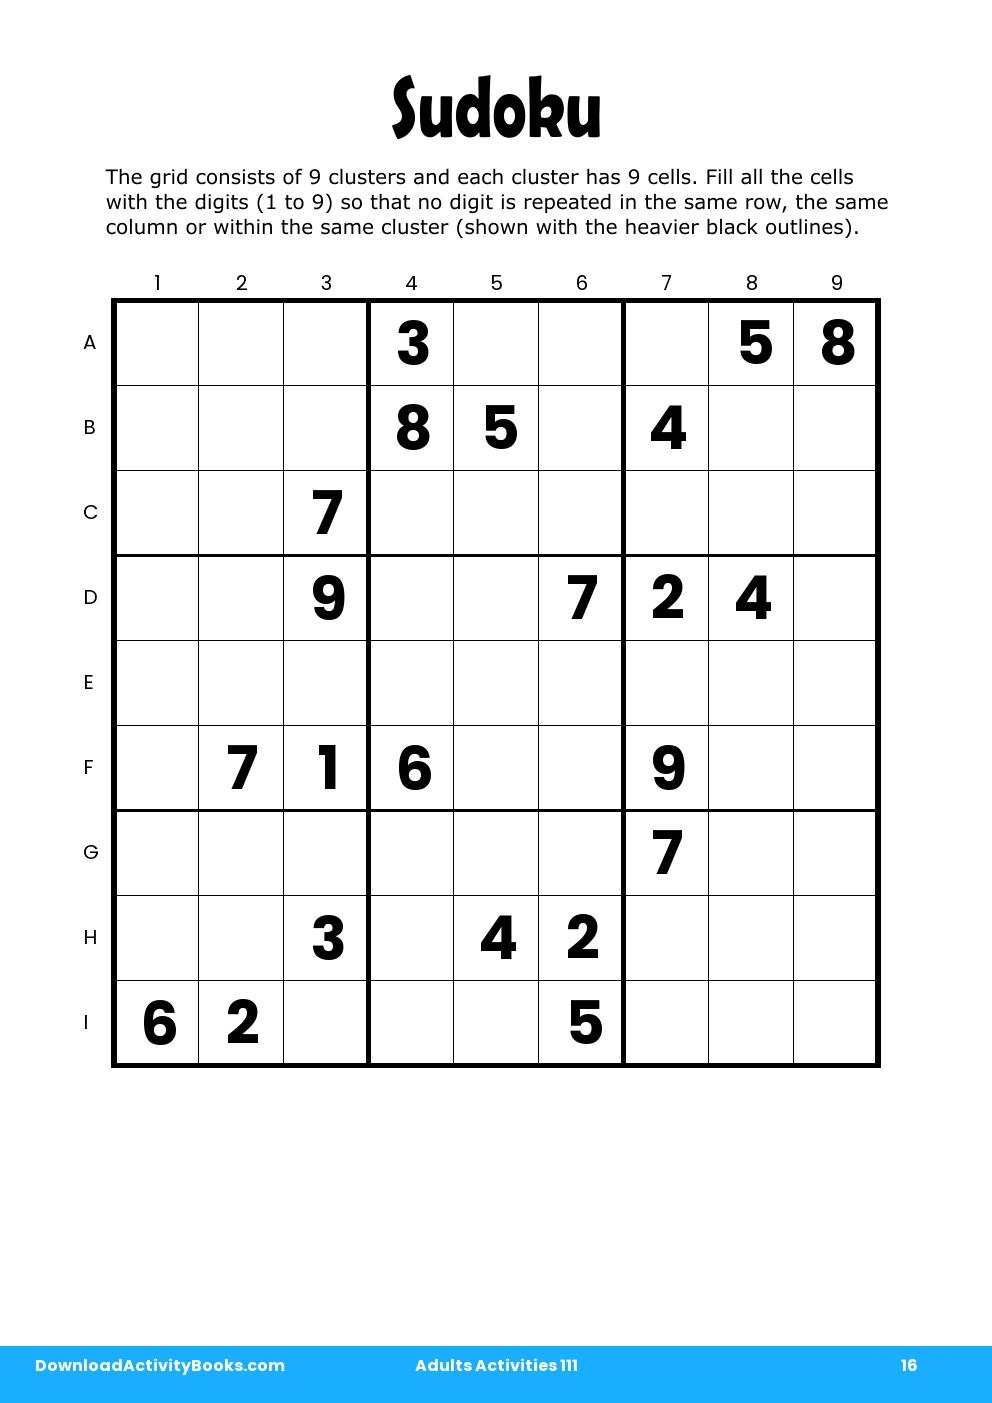 Sudoku in Adults Activities 111